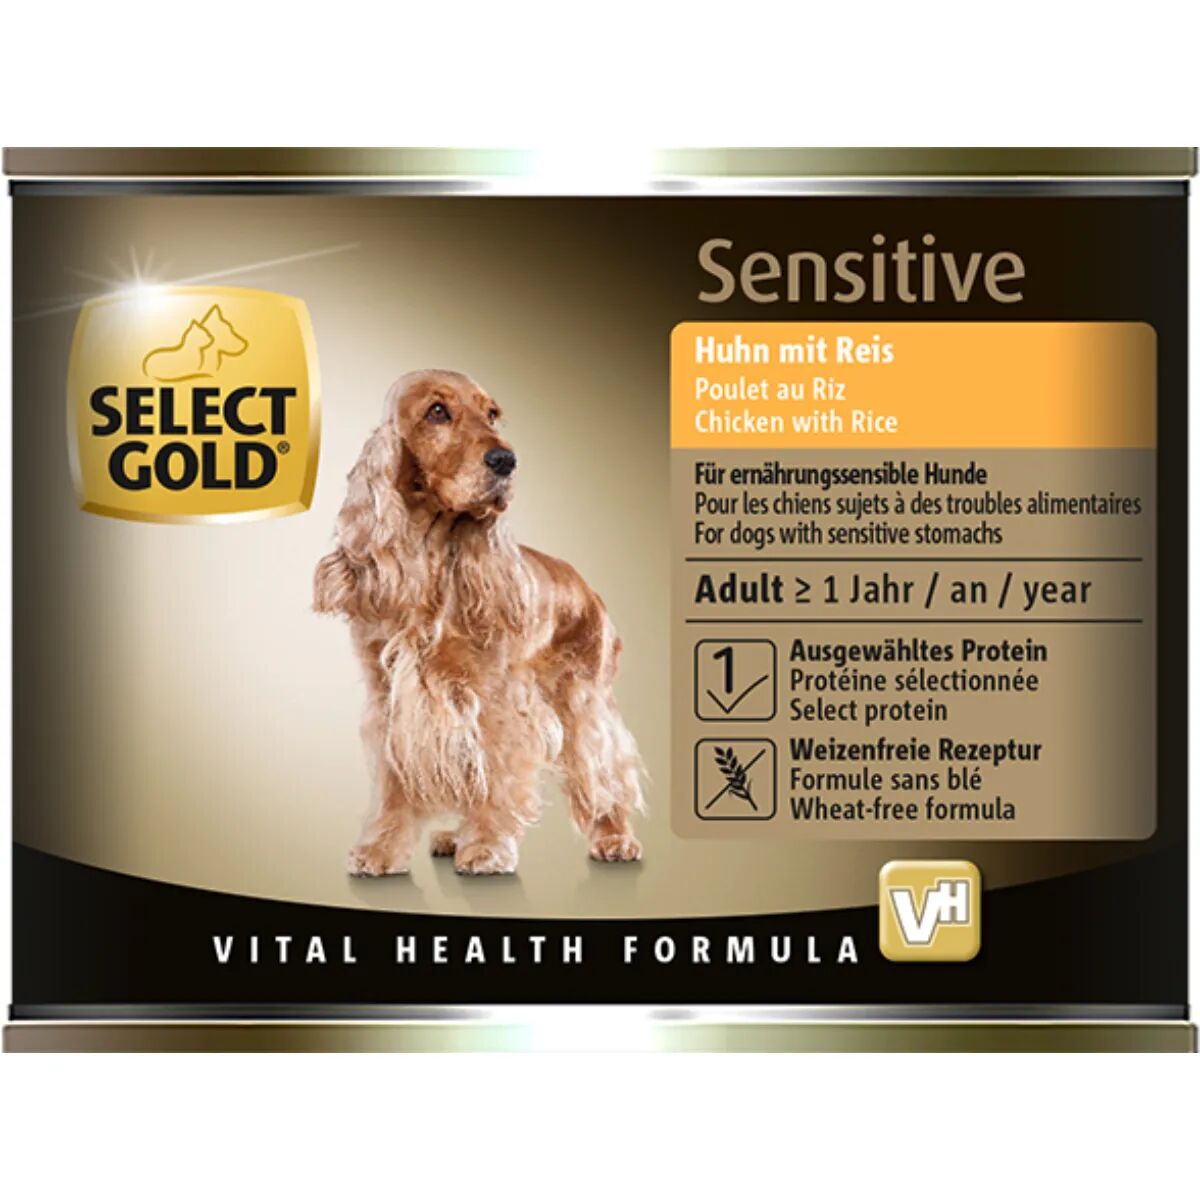 SELECT GOLD Sensitive Dog Lattina Multipack 6x200G POLLO CON RISO